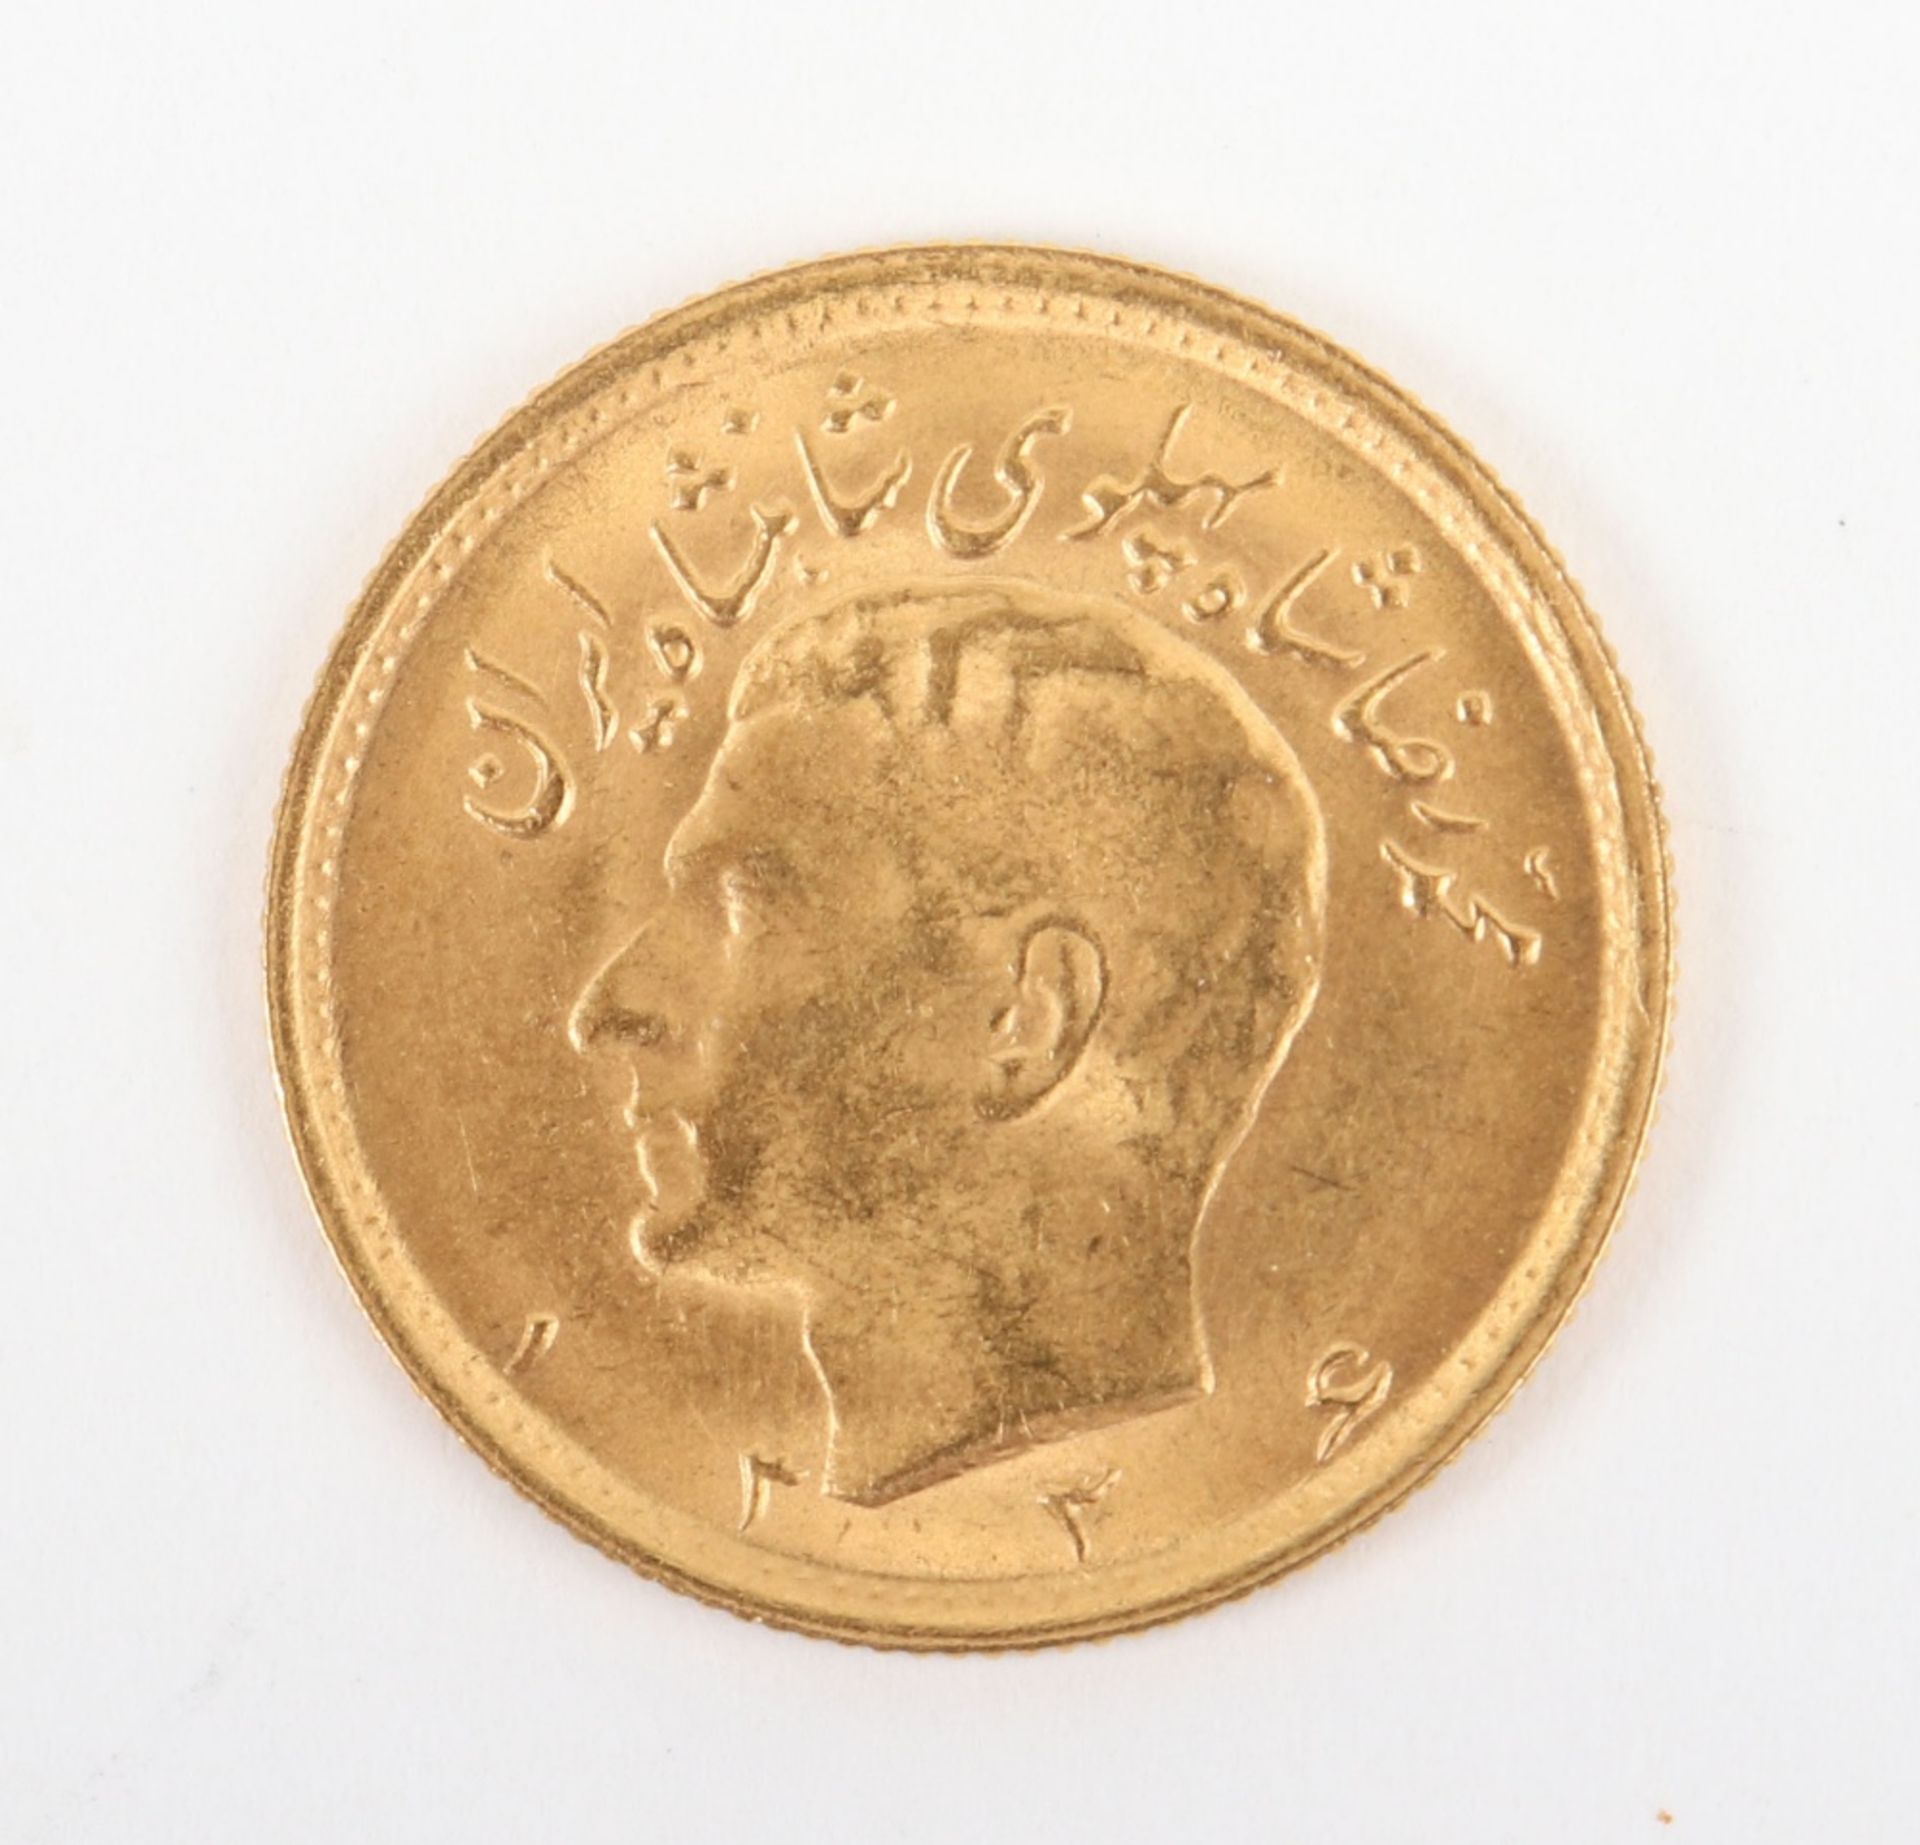 Iranian Half Pahlavi gold coin